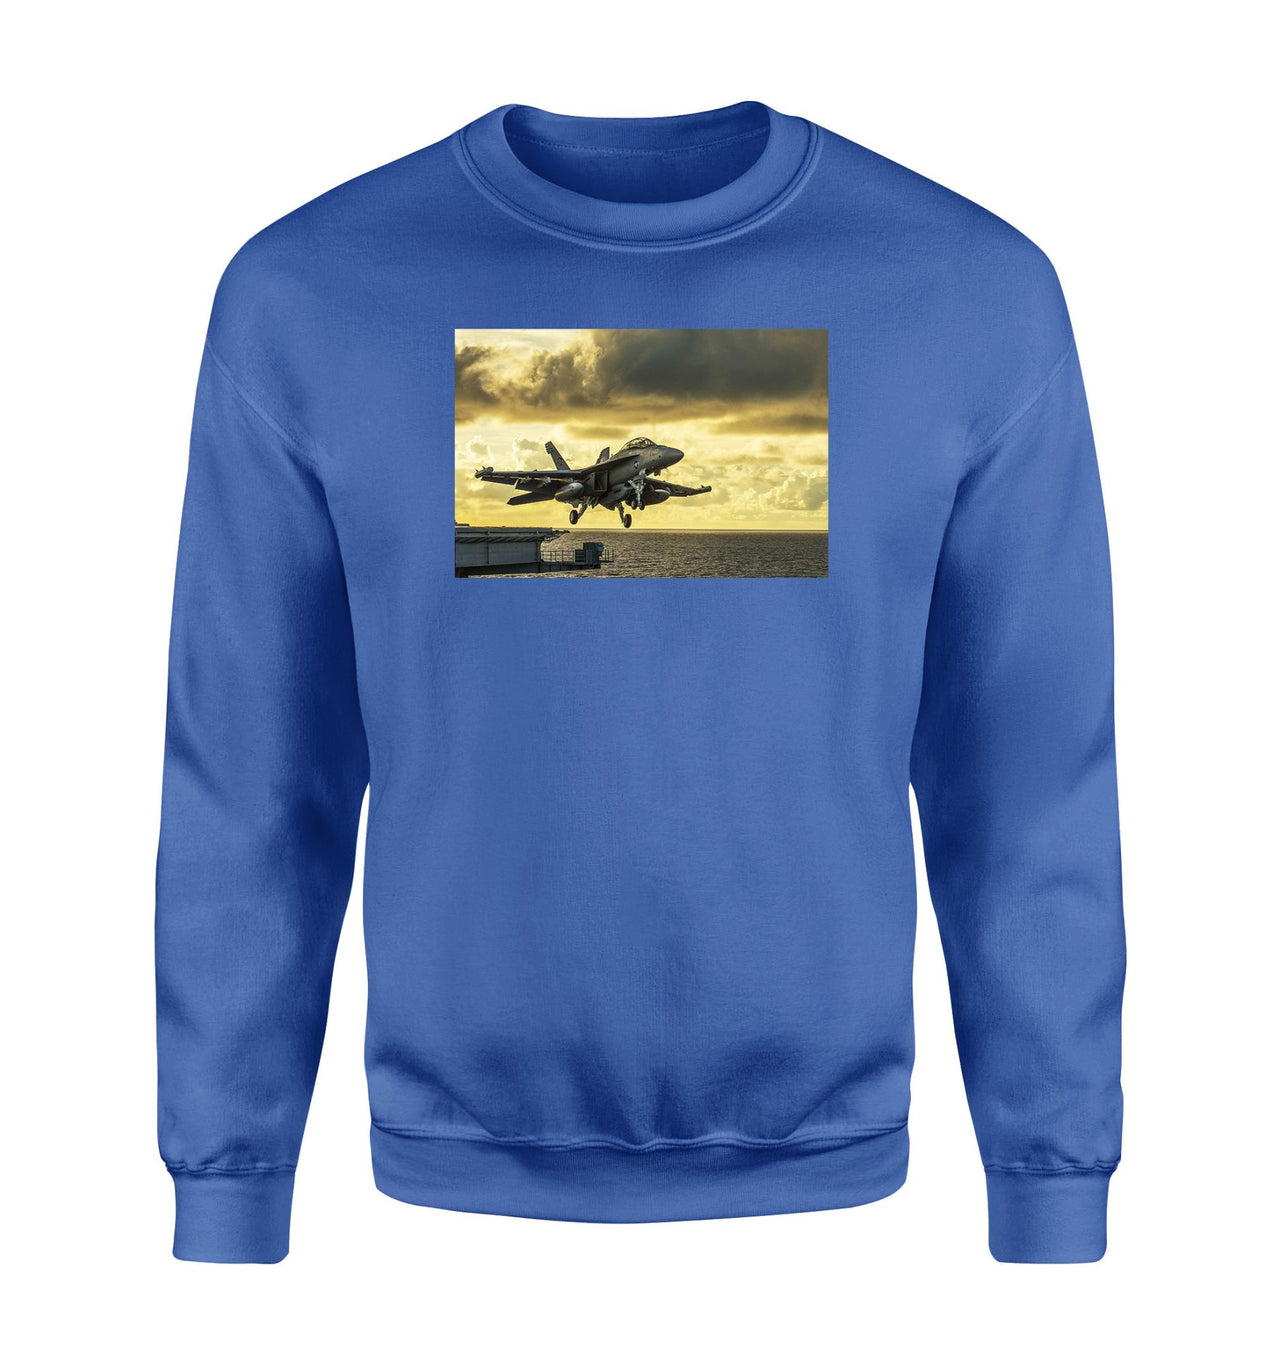 Departing Jet Aircraft Designed Sweatshirts